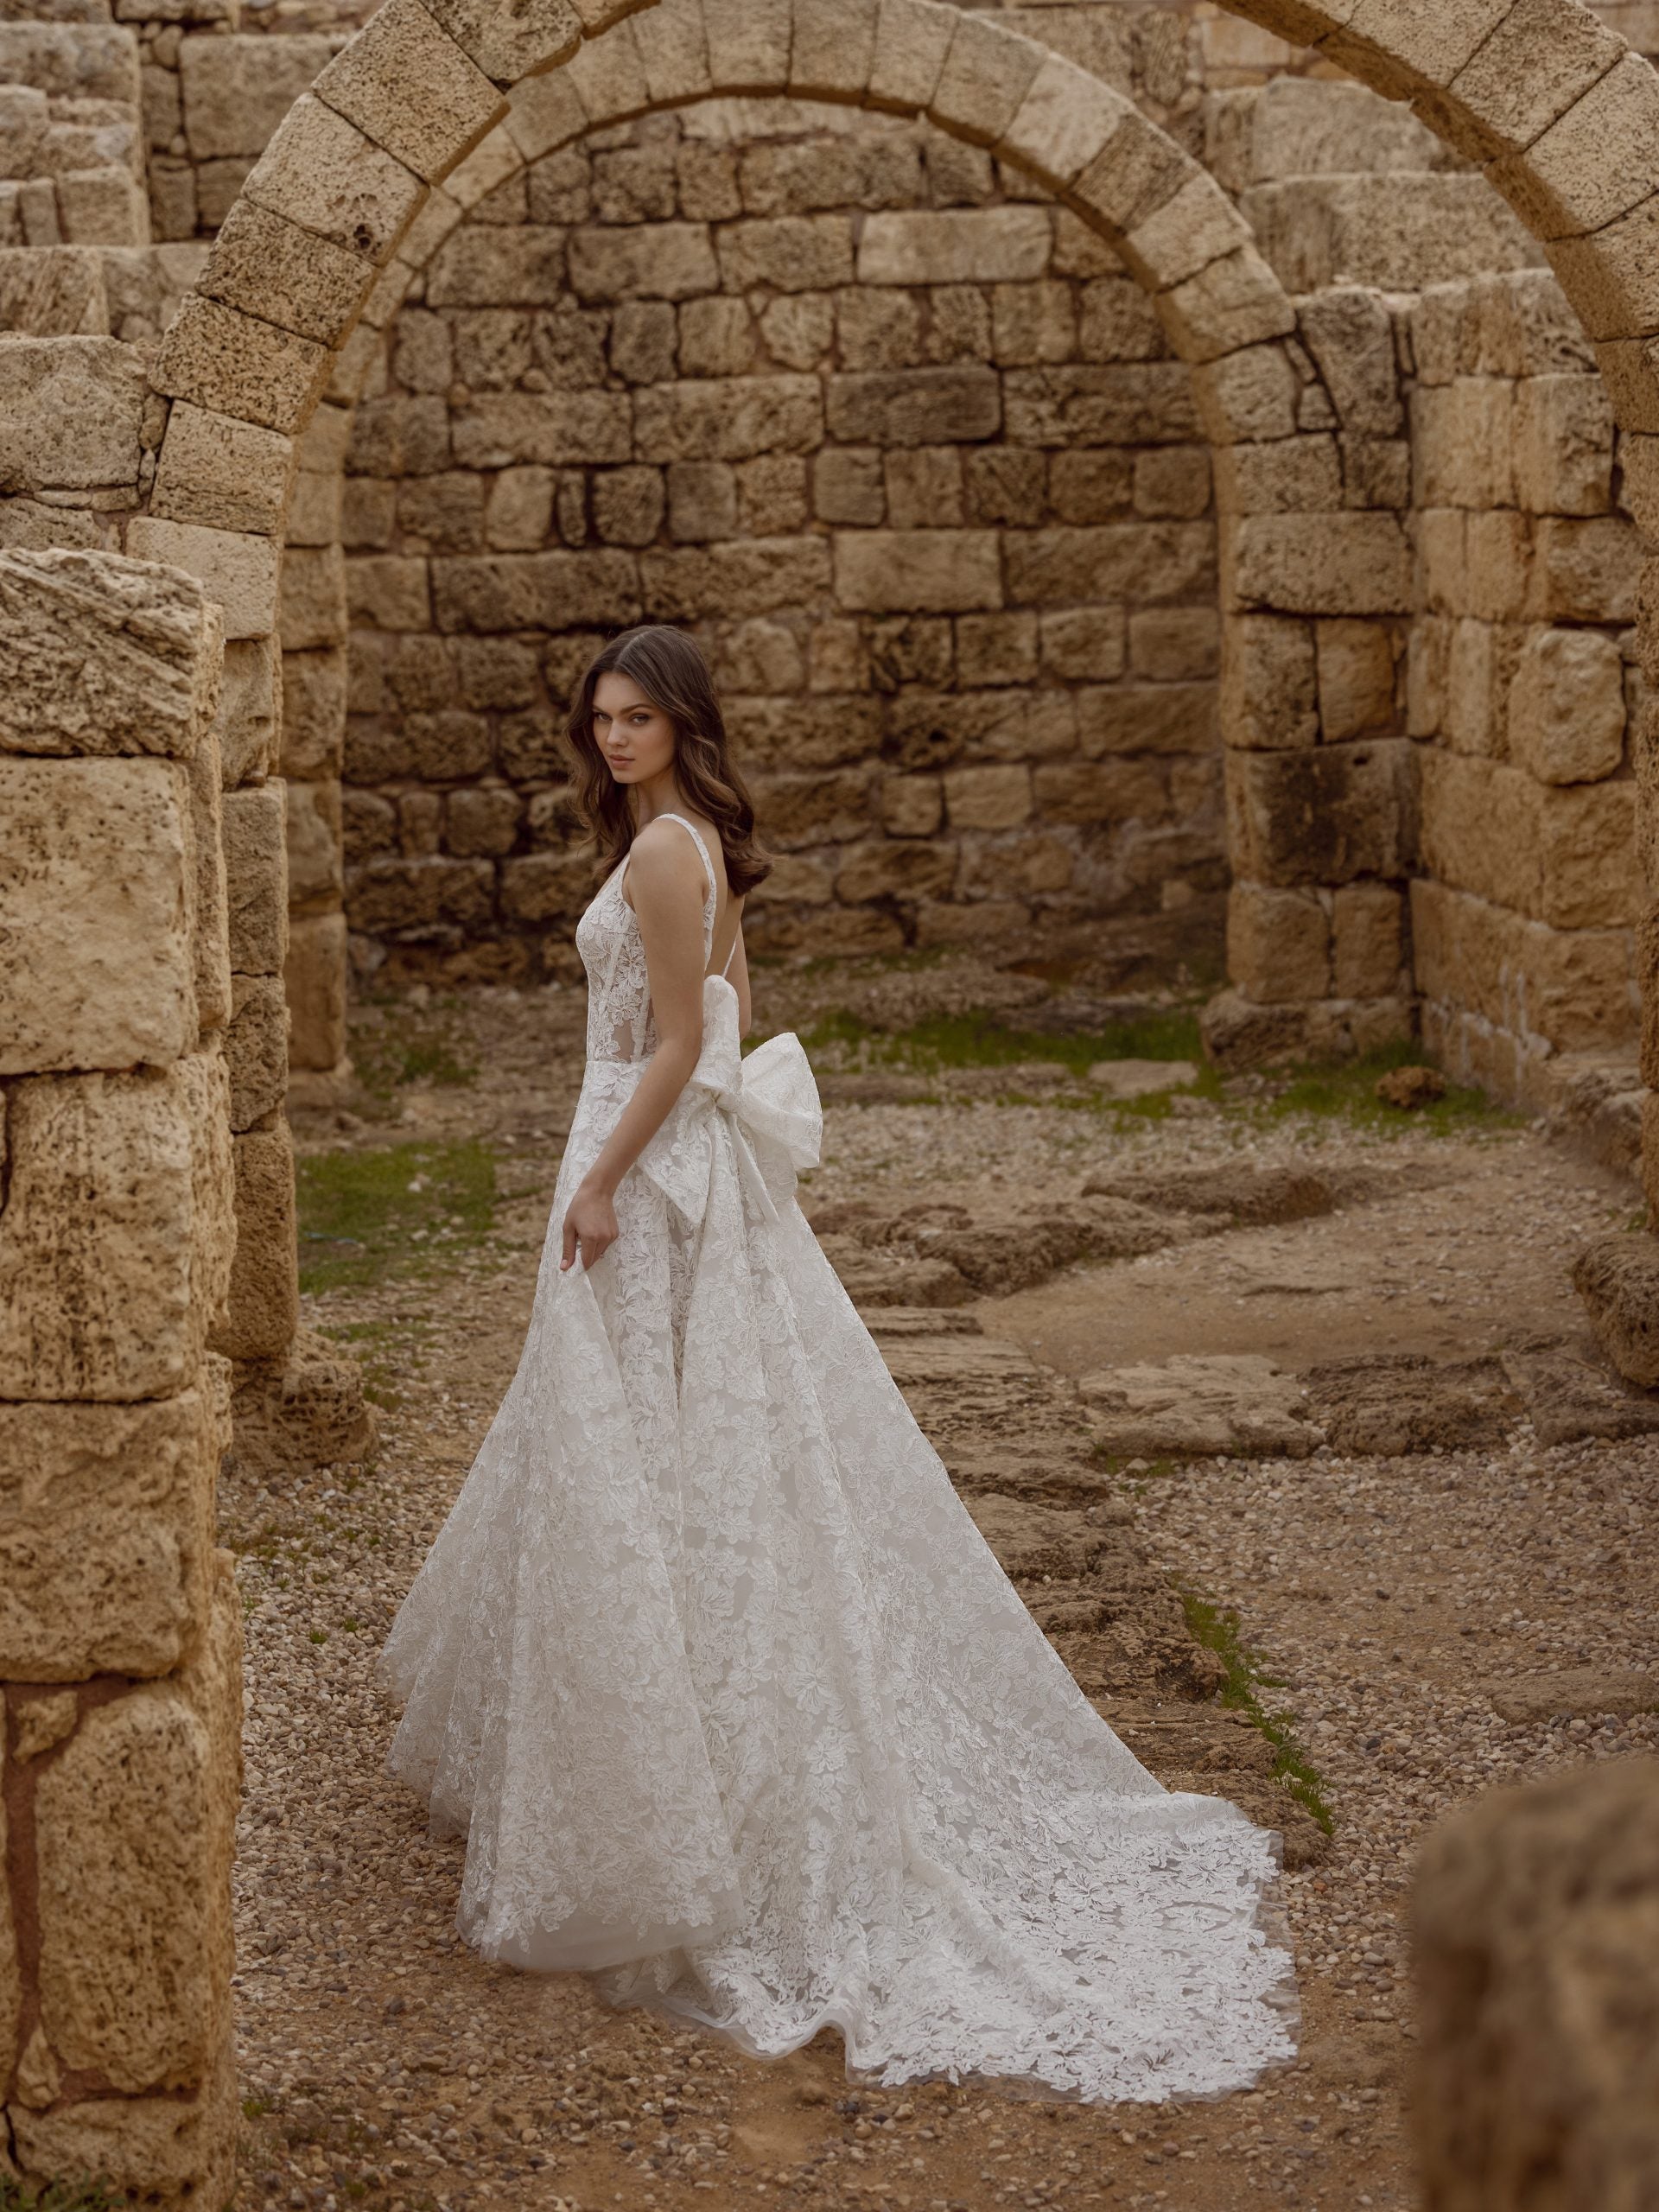 Lace Sleeveless A-line Wedding Dress by Love by Pnina Tornai - Image 2